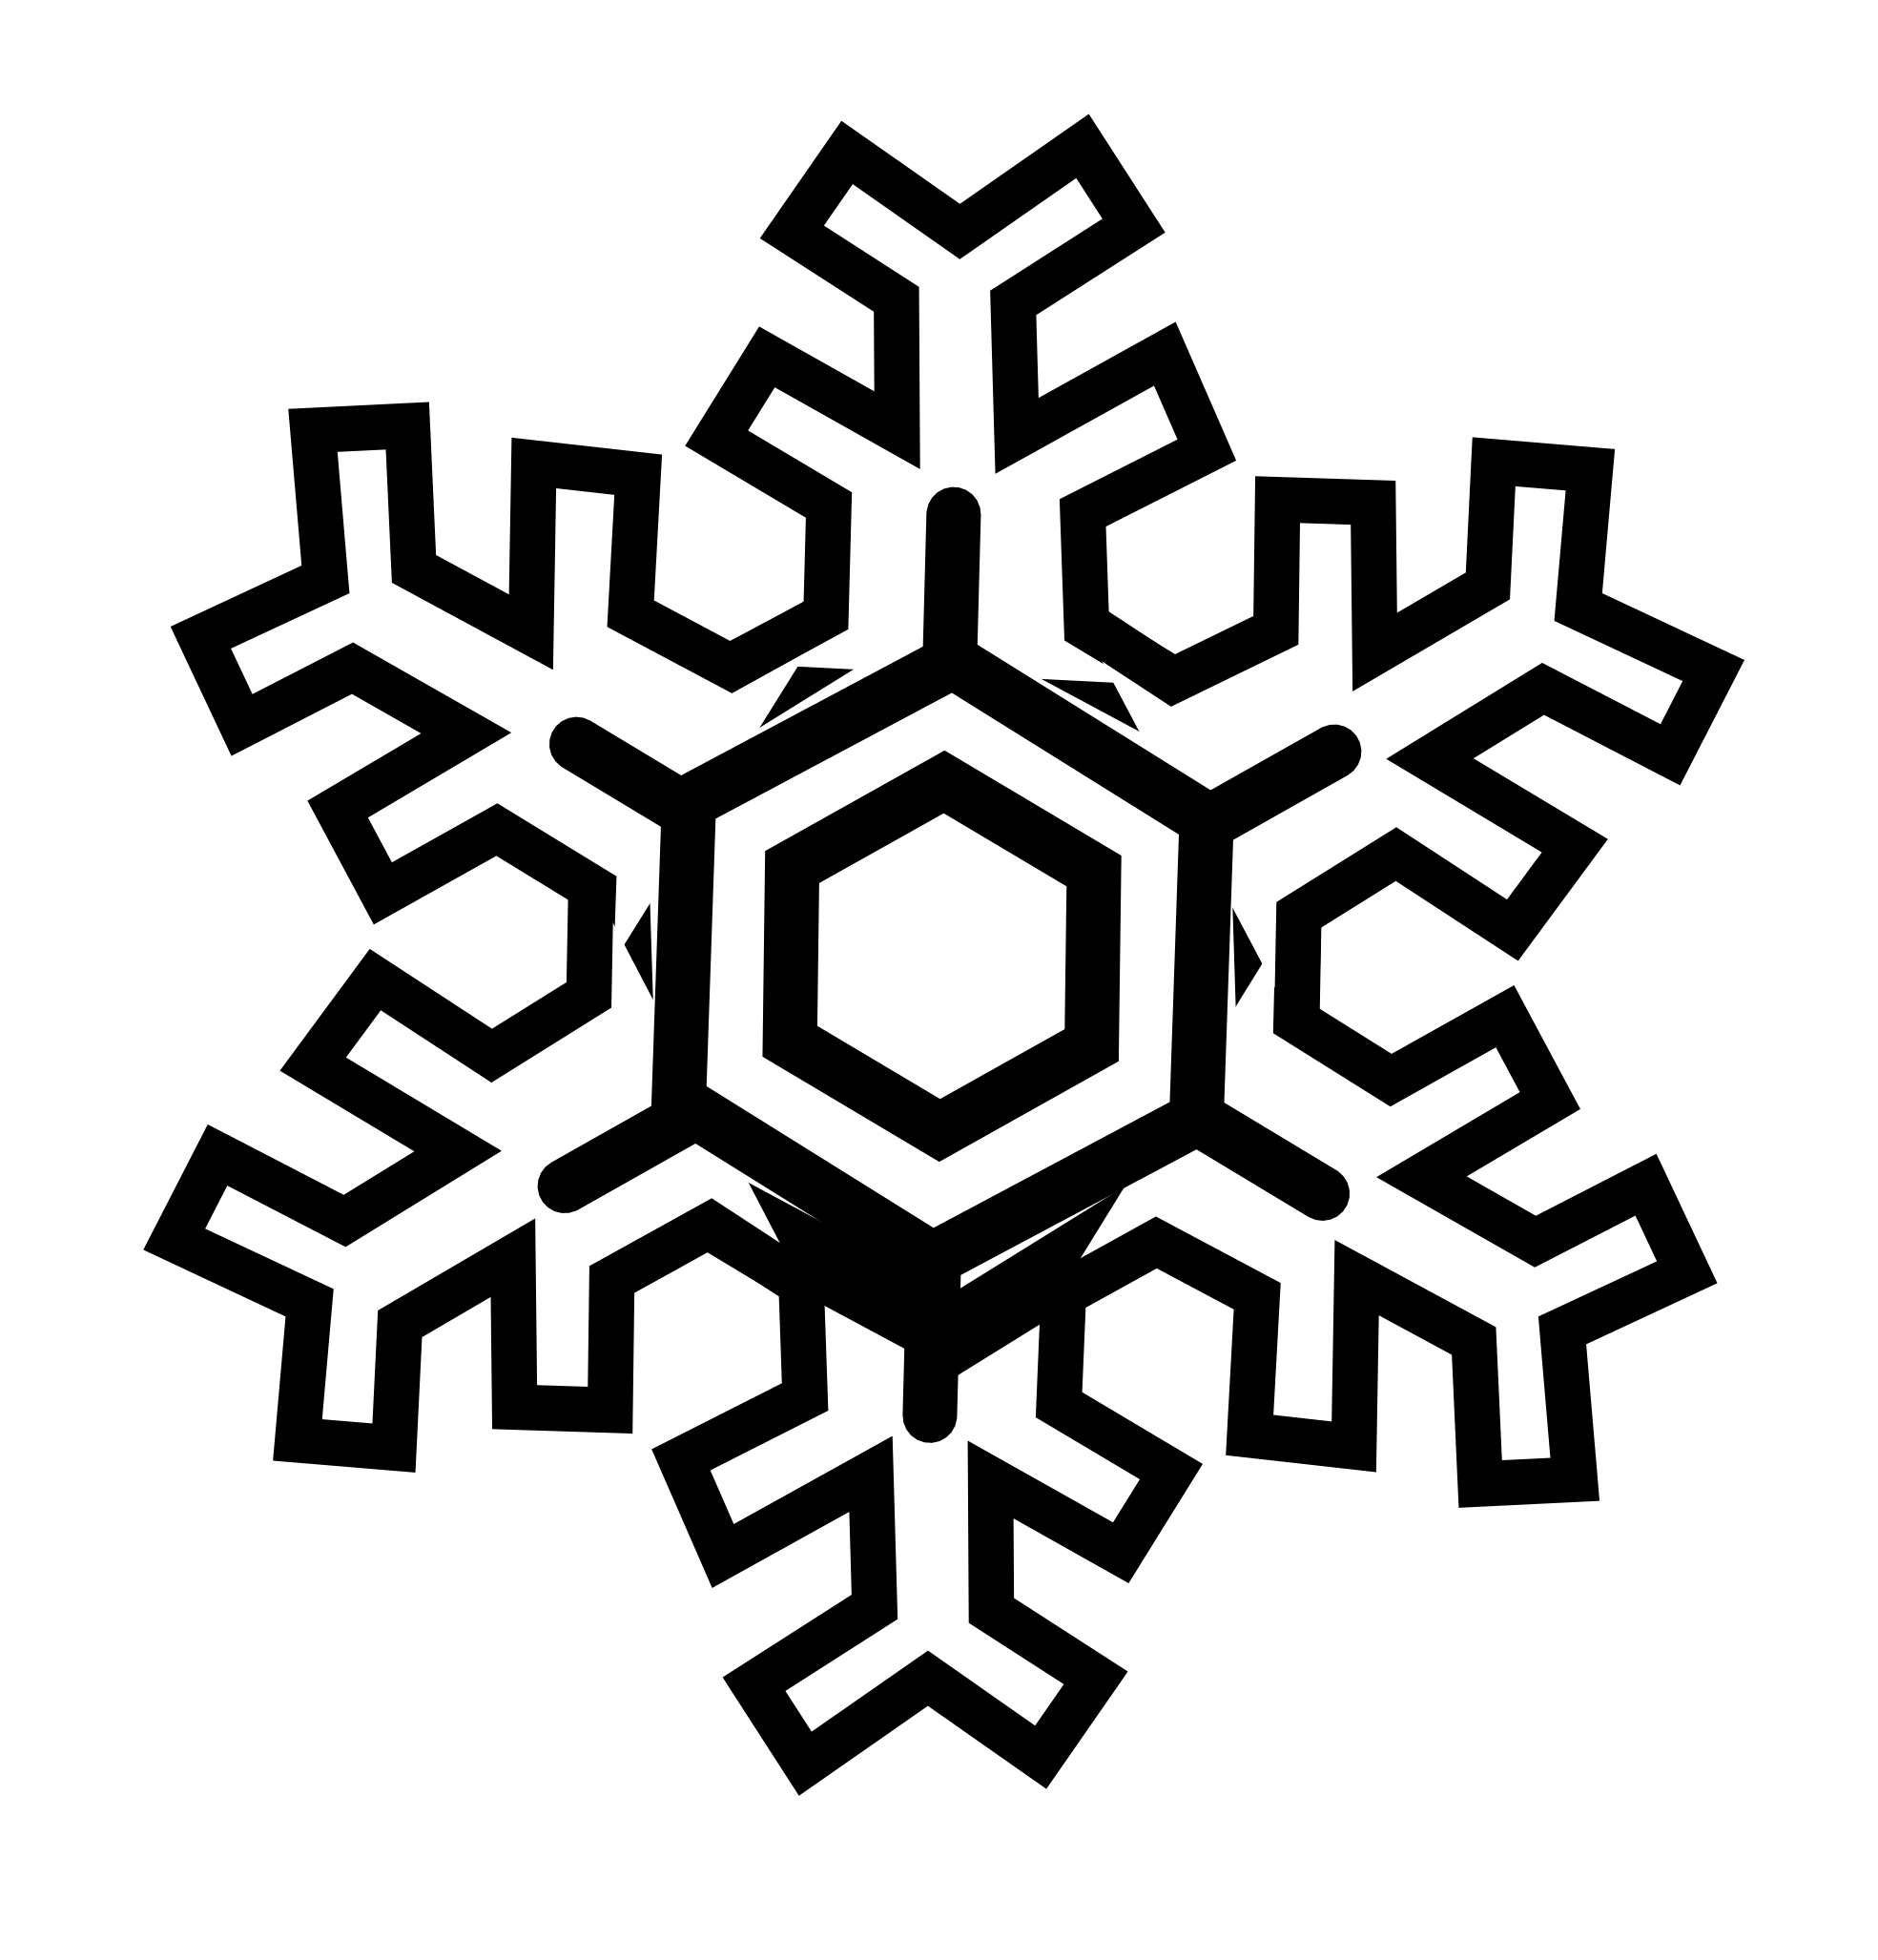 clipart snowflake modern